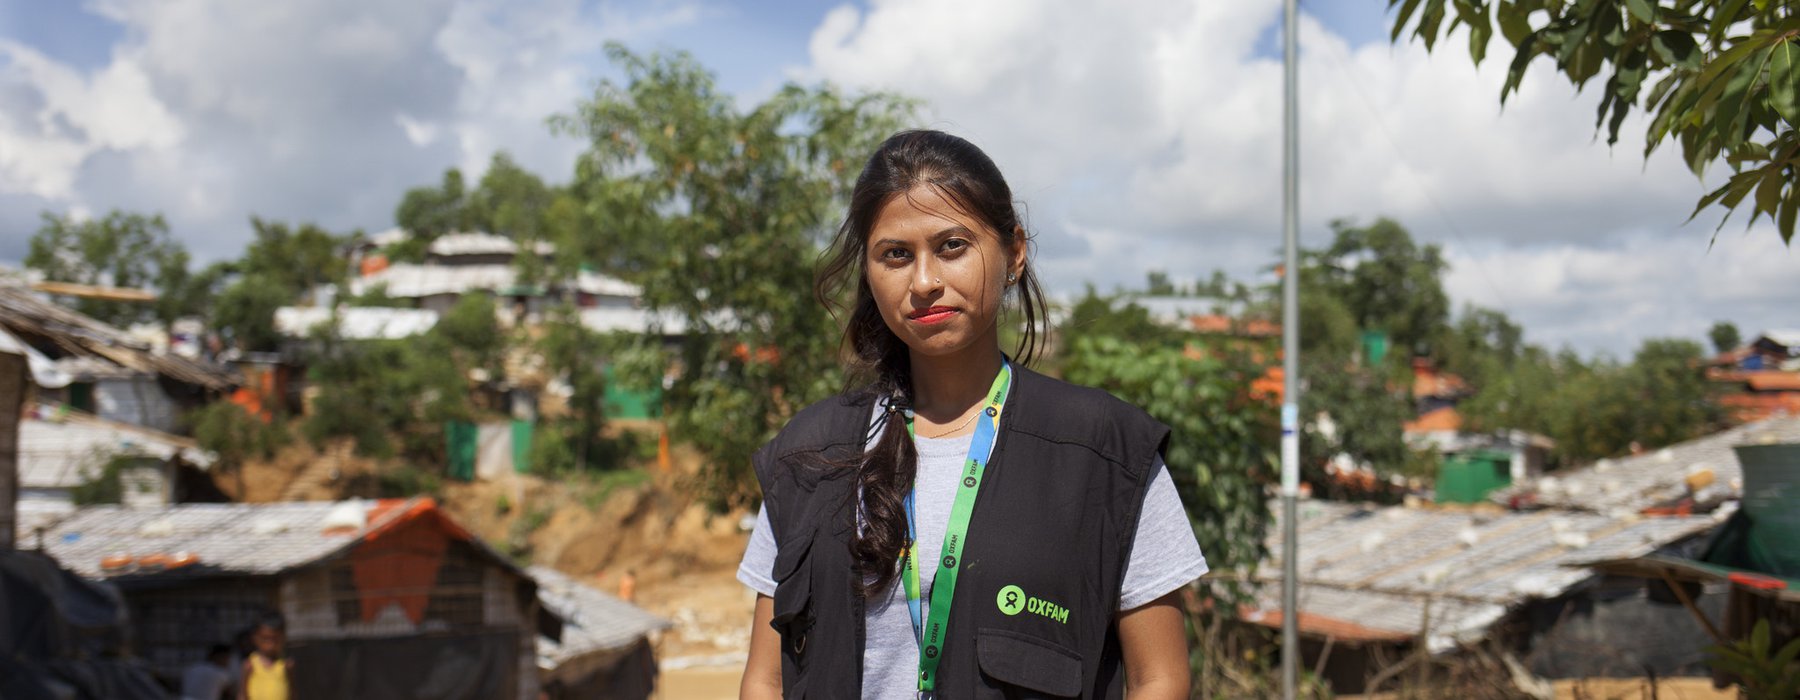 Portrait of Iffat, Oxfam aid worker